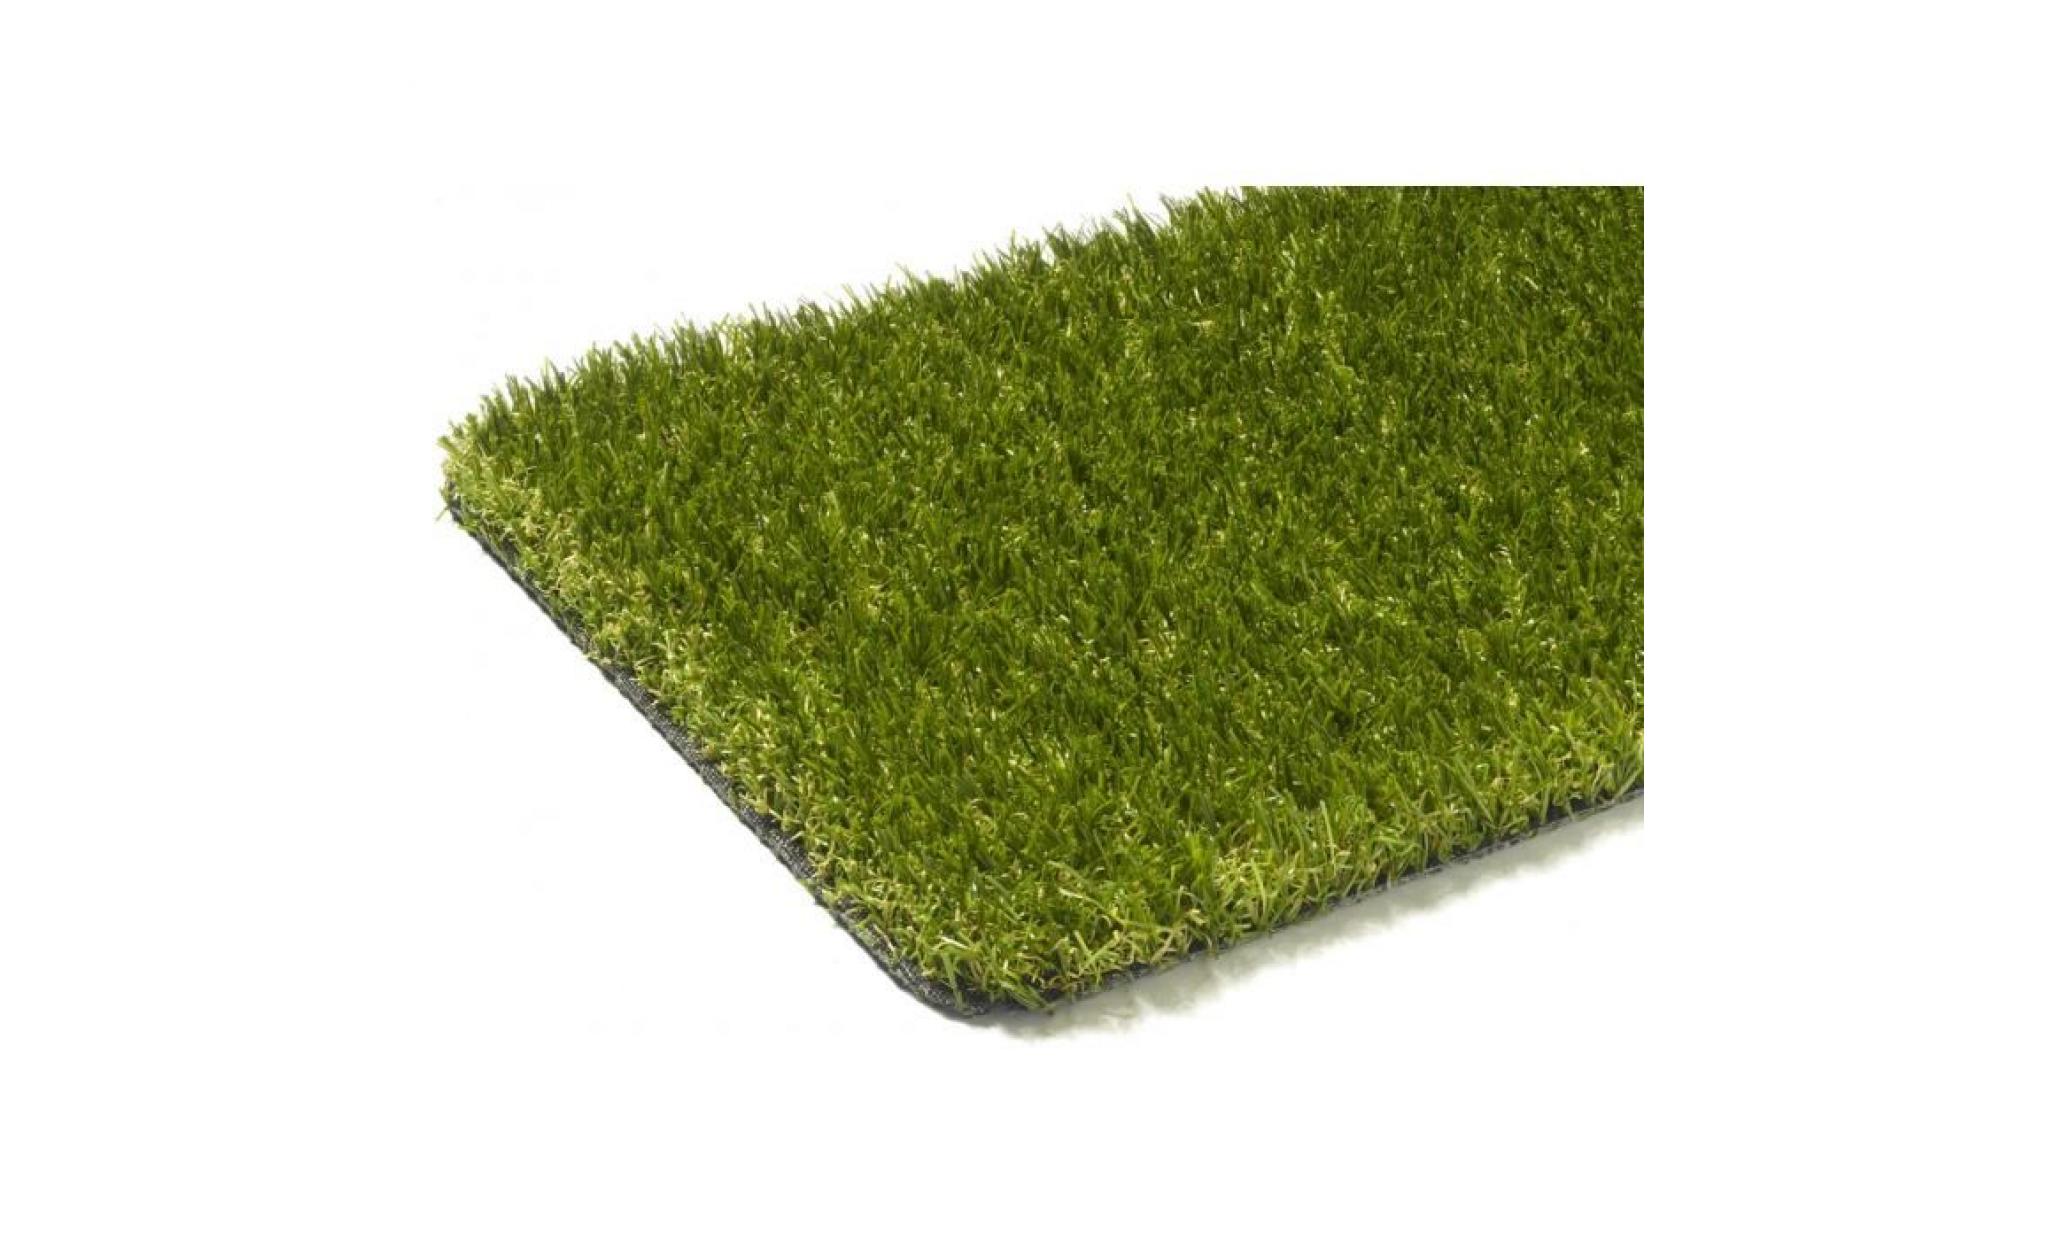 chelsea   tapis type luxe gazon artificiel – pour jardin, terrasse, balcon   vert  [200x250 cm]